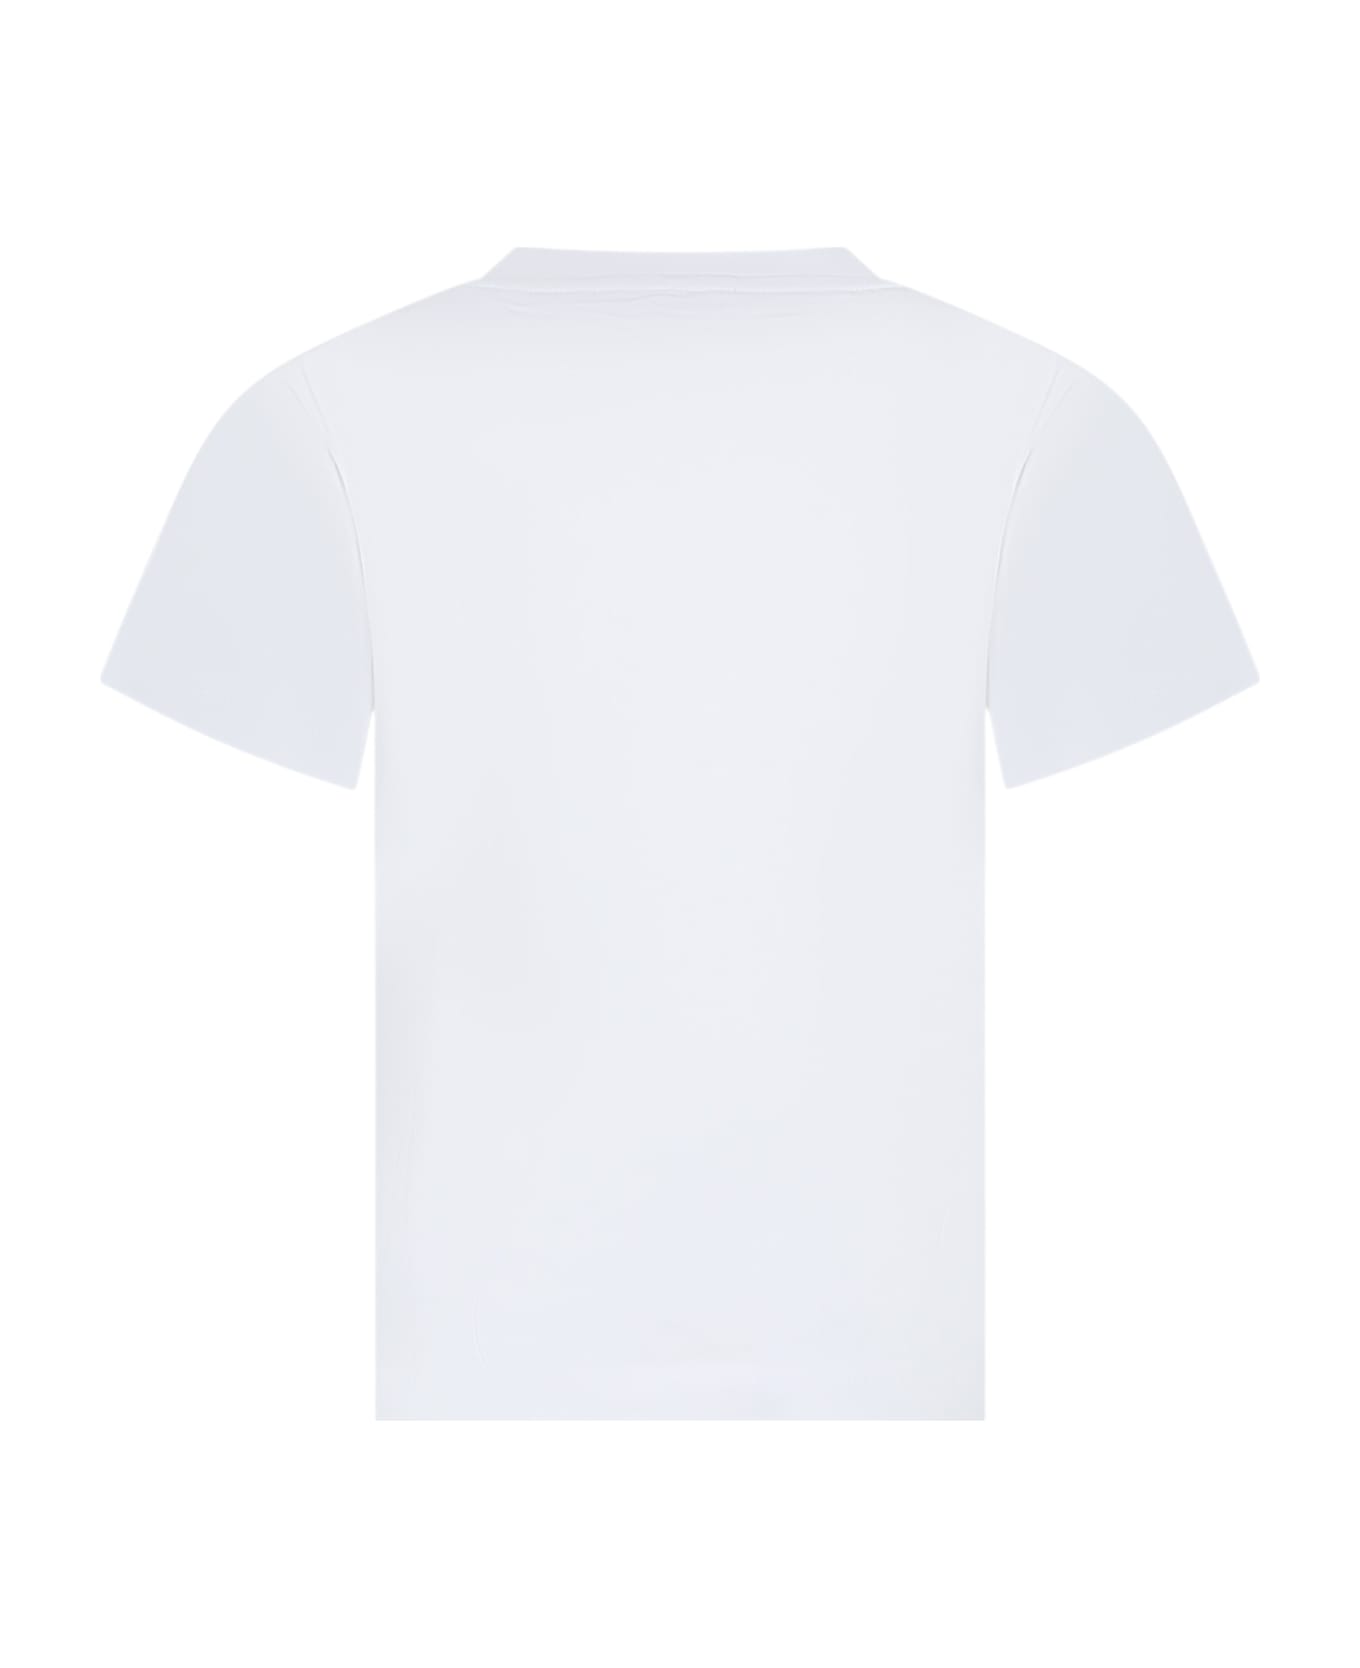 Stella McCartney Kids White T-shirt For Boy With Sun - White